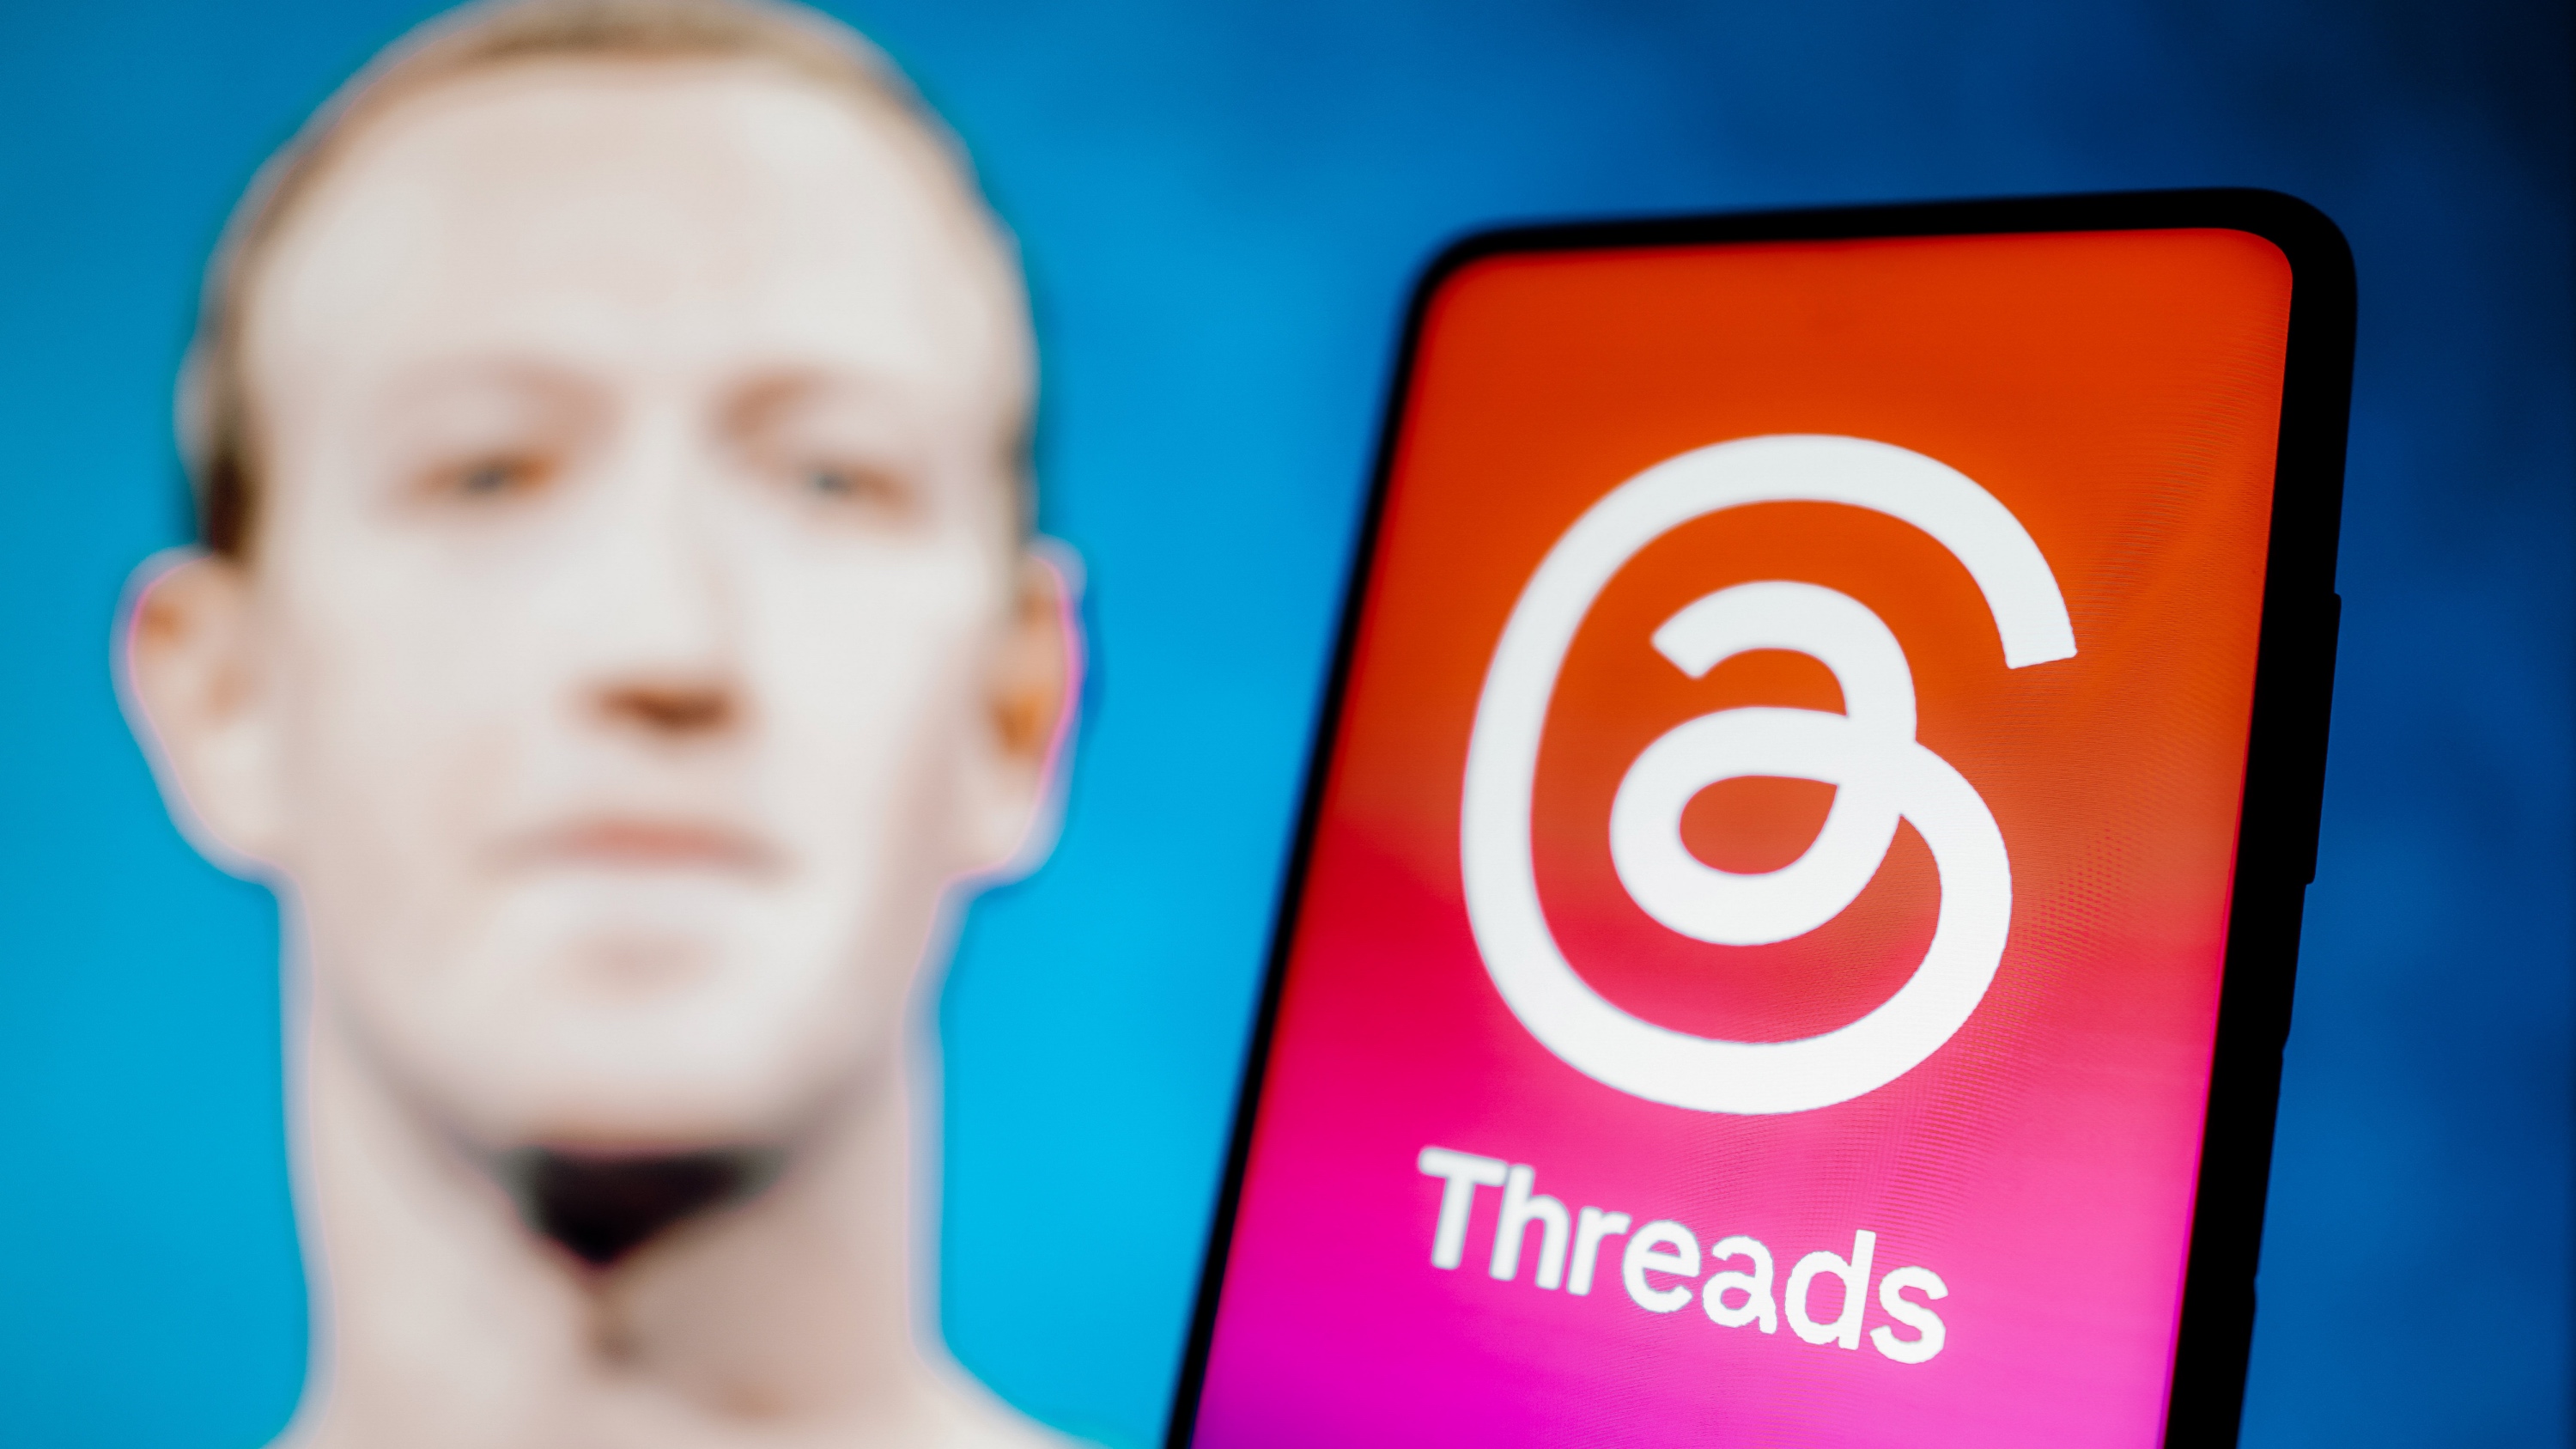 Meta Threads app and Mark Zuckerberg